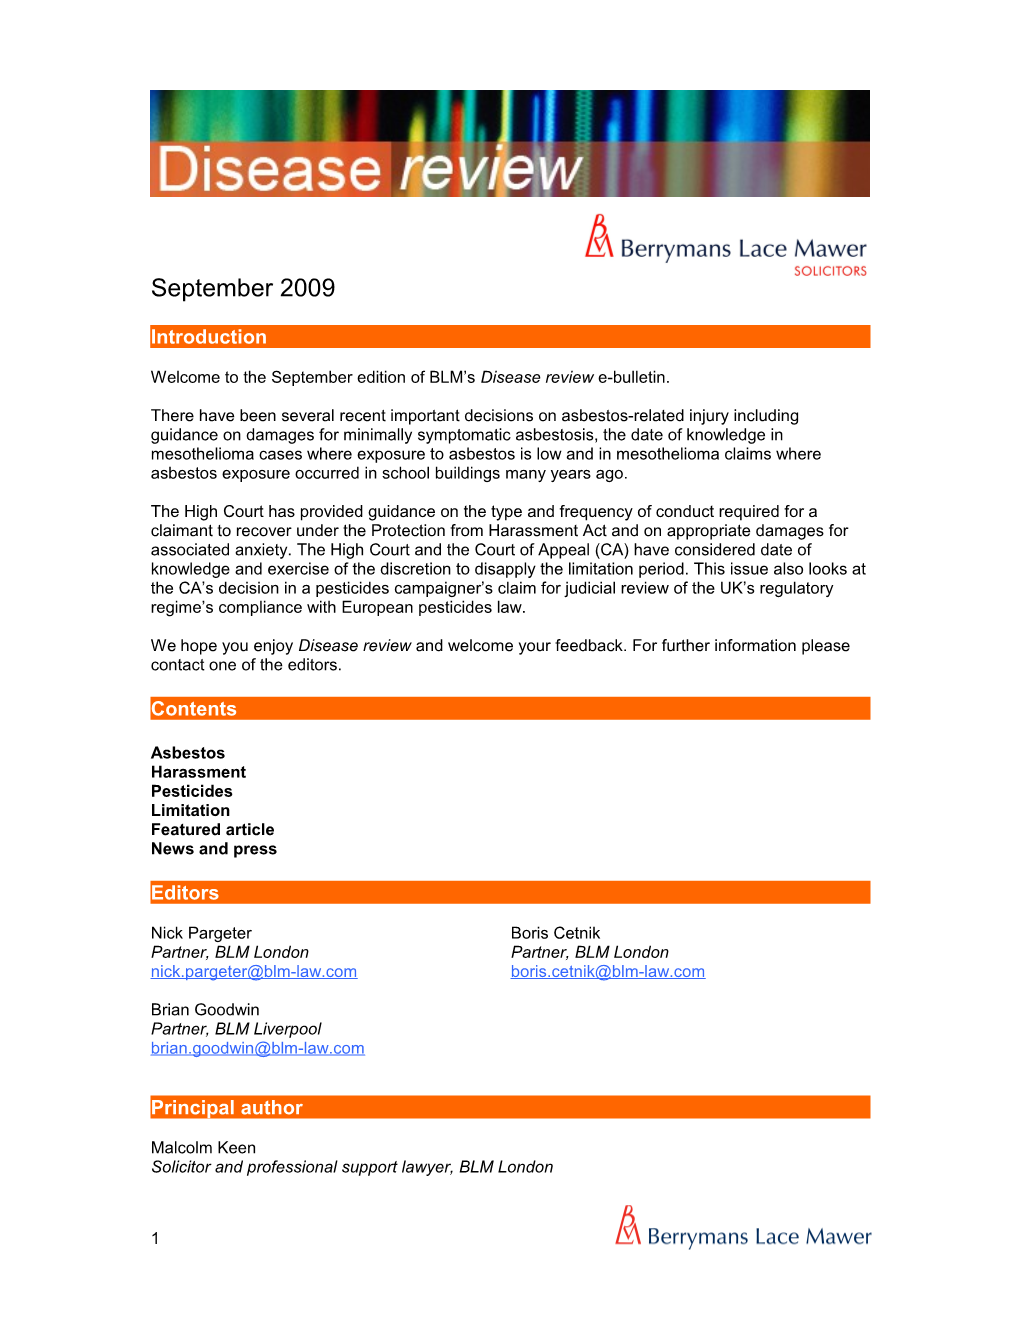 Asbestos-Related Illness